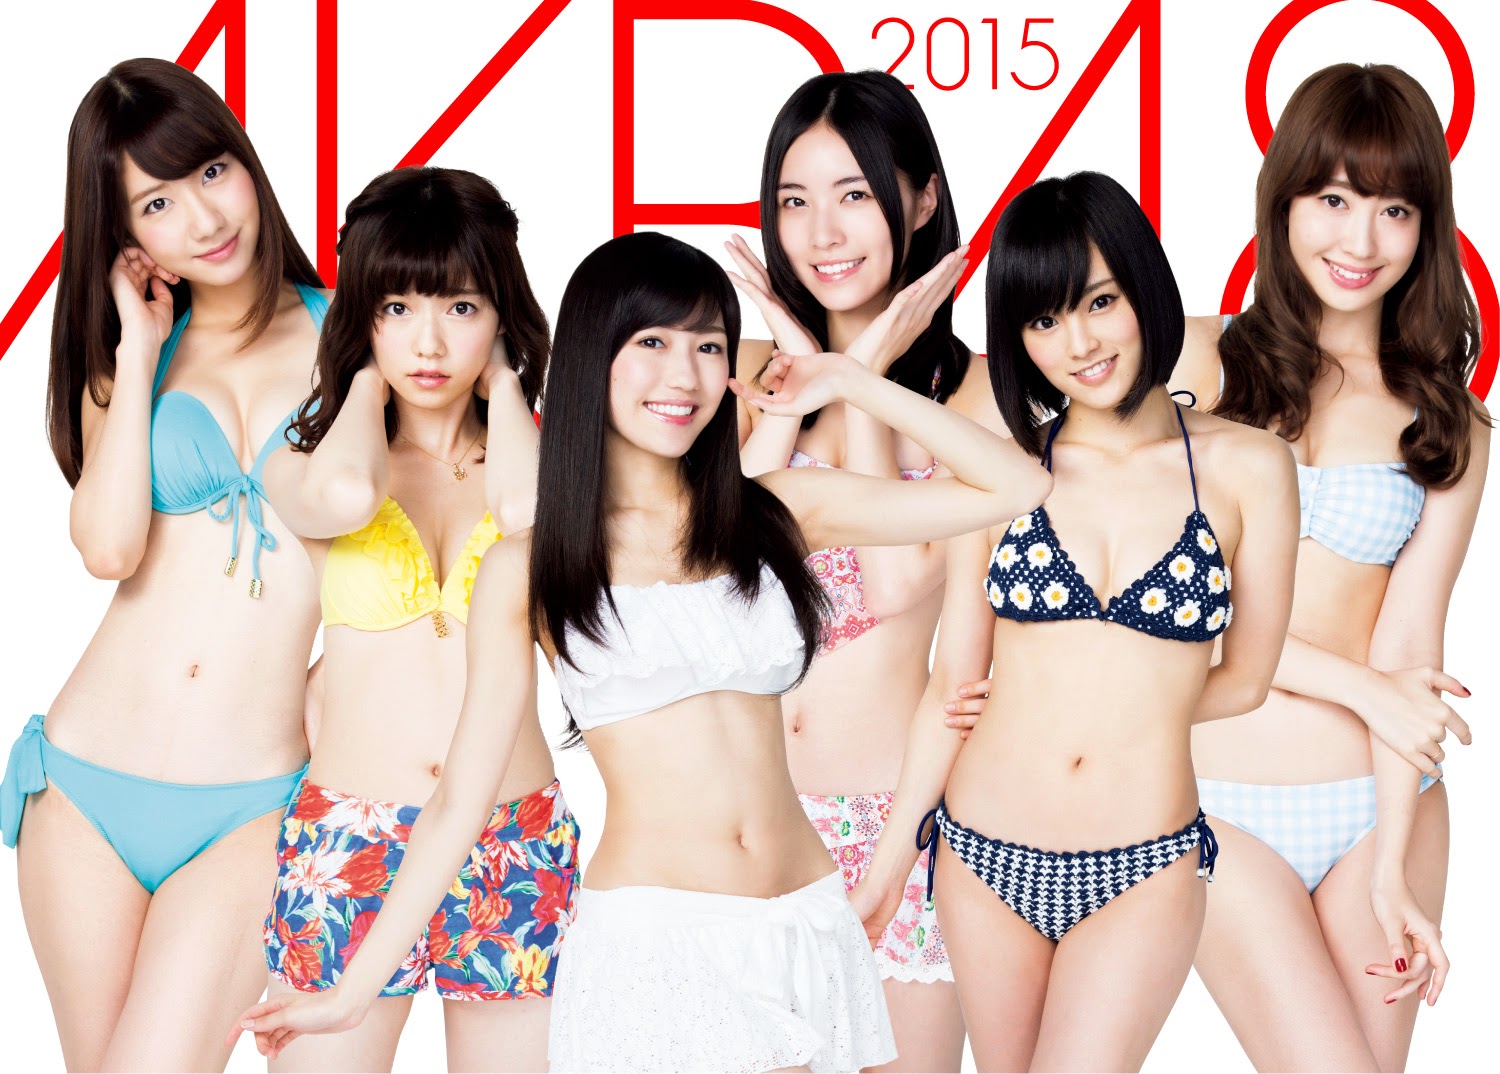 Arrest of Ex-AKB48 Manager Reveals Illicit Films of Naked Members